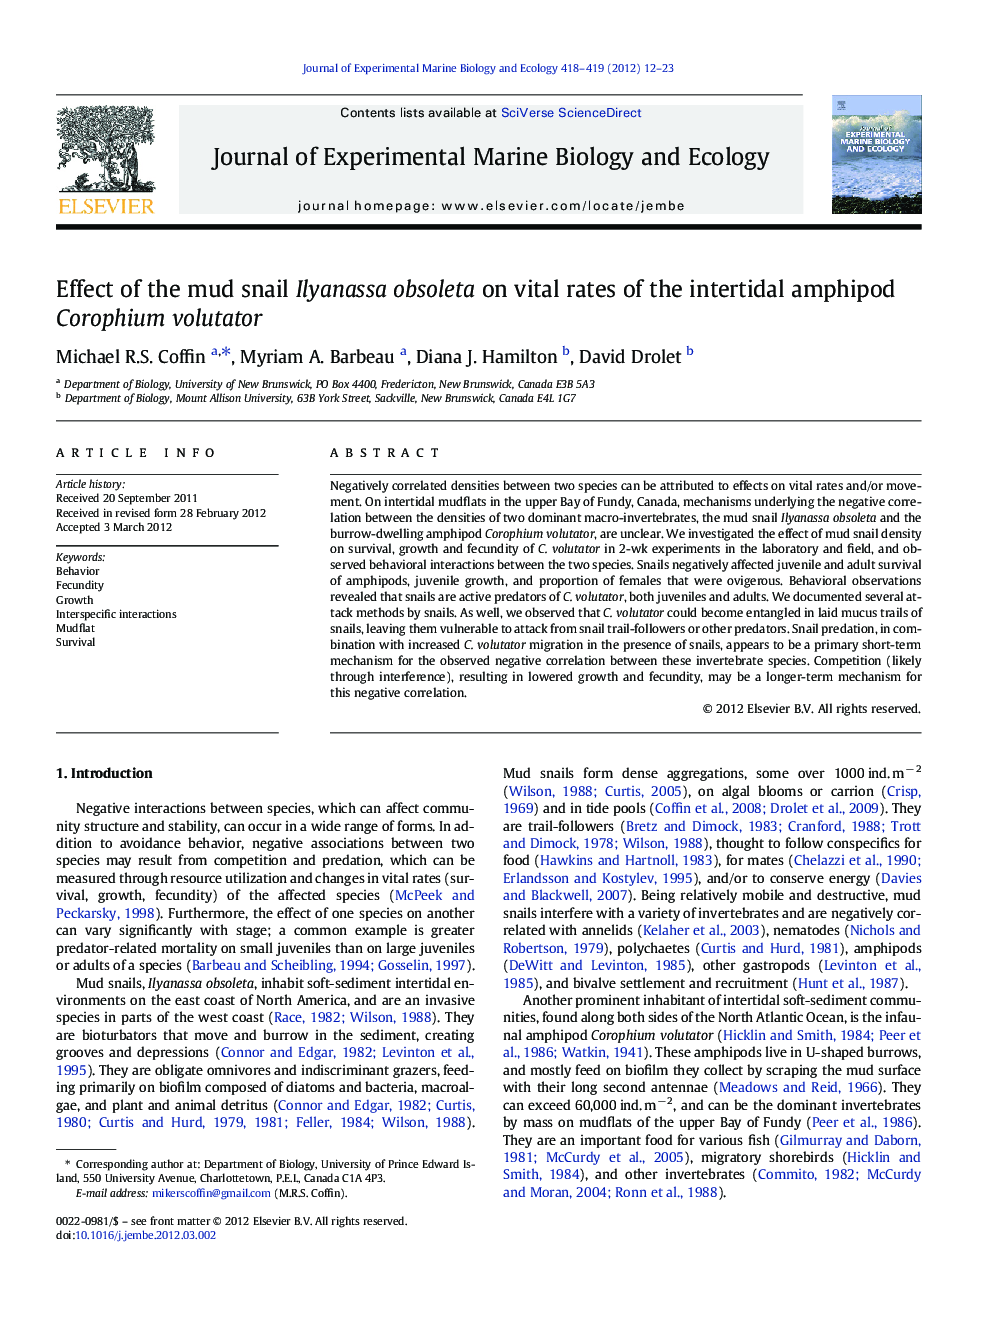 Effect of the mud snail Ilyanassa obsoleta on vital rates of the intertidal amphipod Corophium volutator